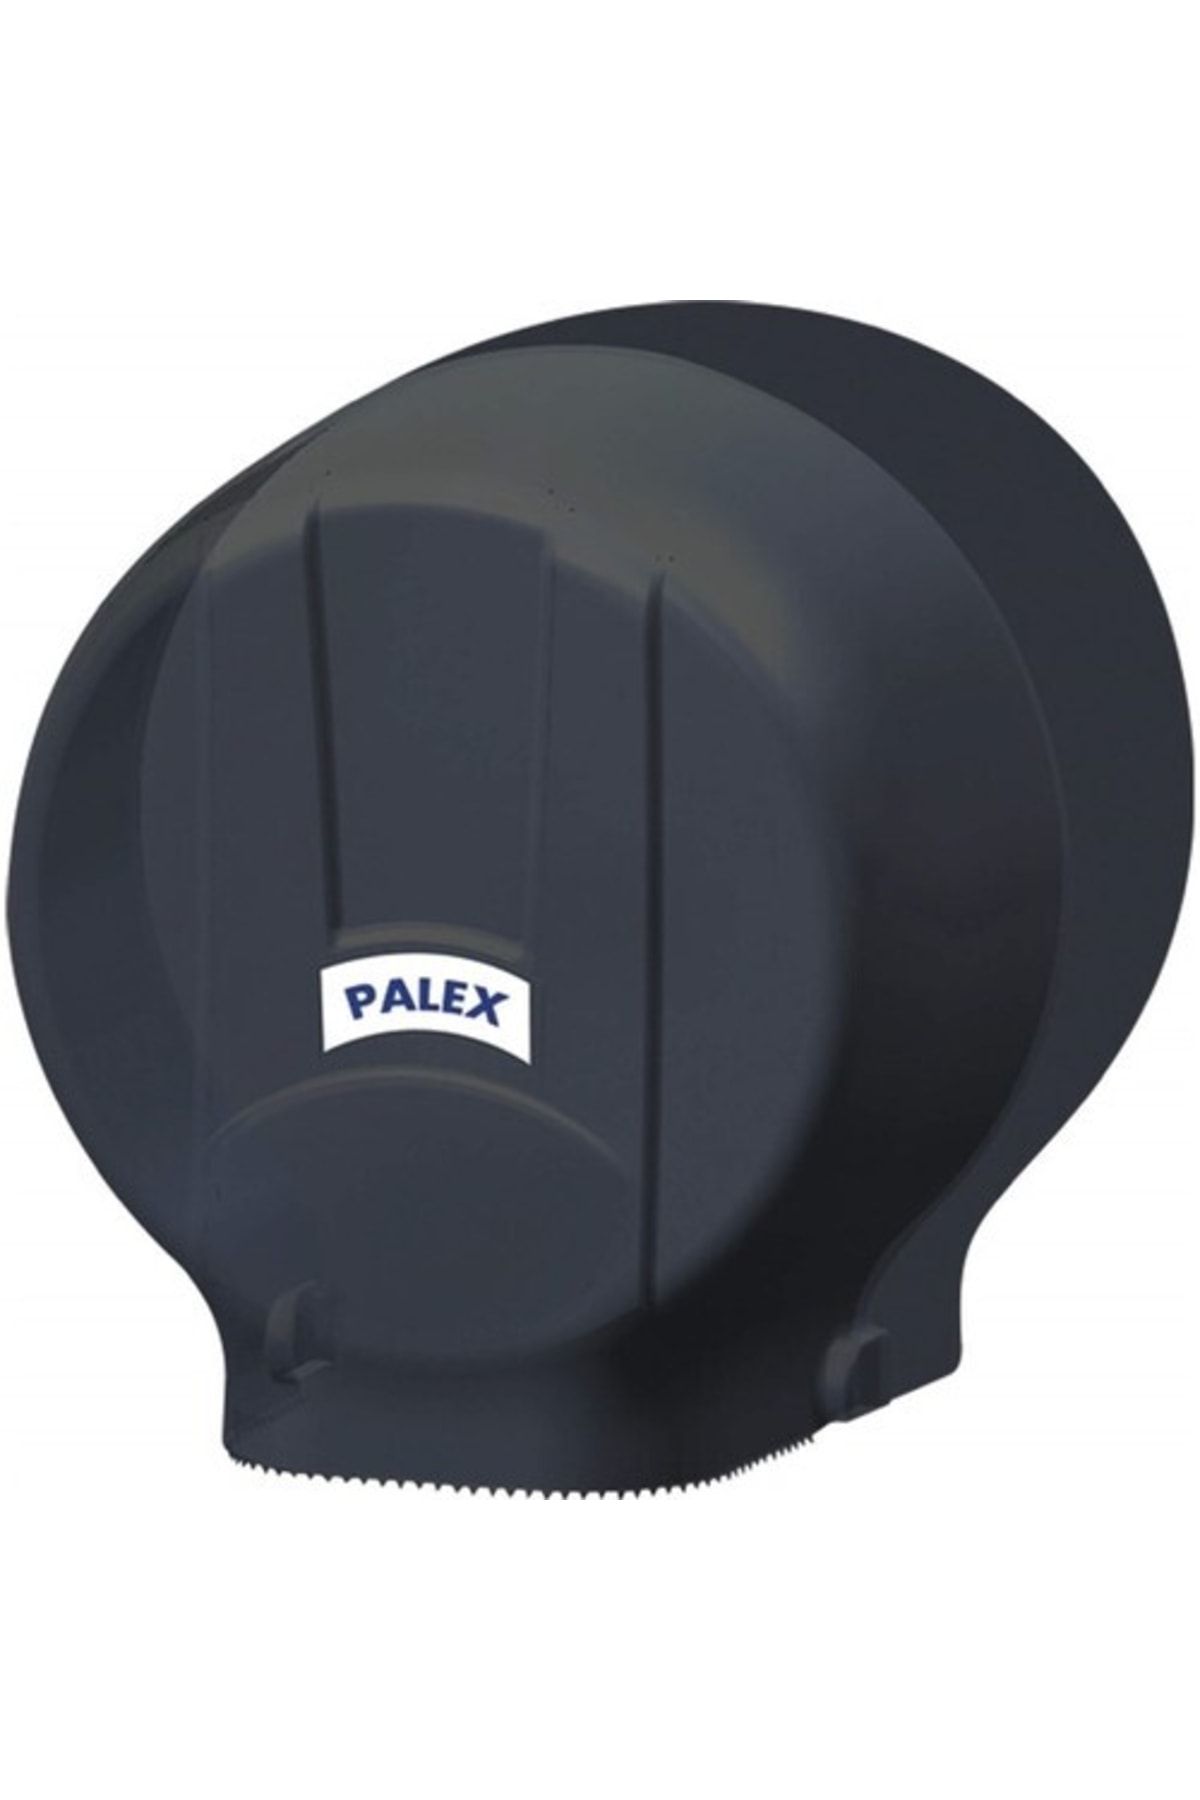 Palex 3448-s Standart Jumbo Tuvalet Kağıdı Dispenseri Siyah